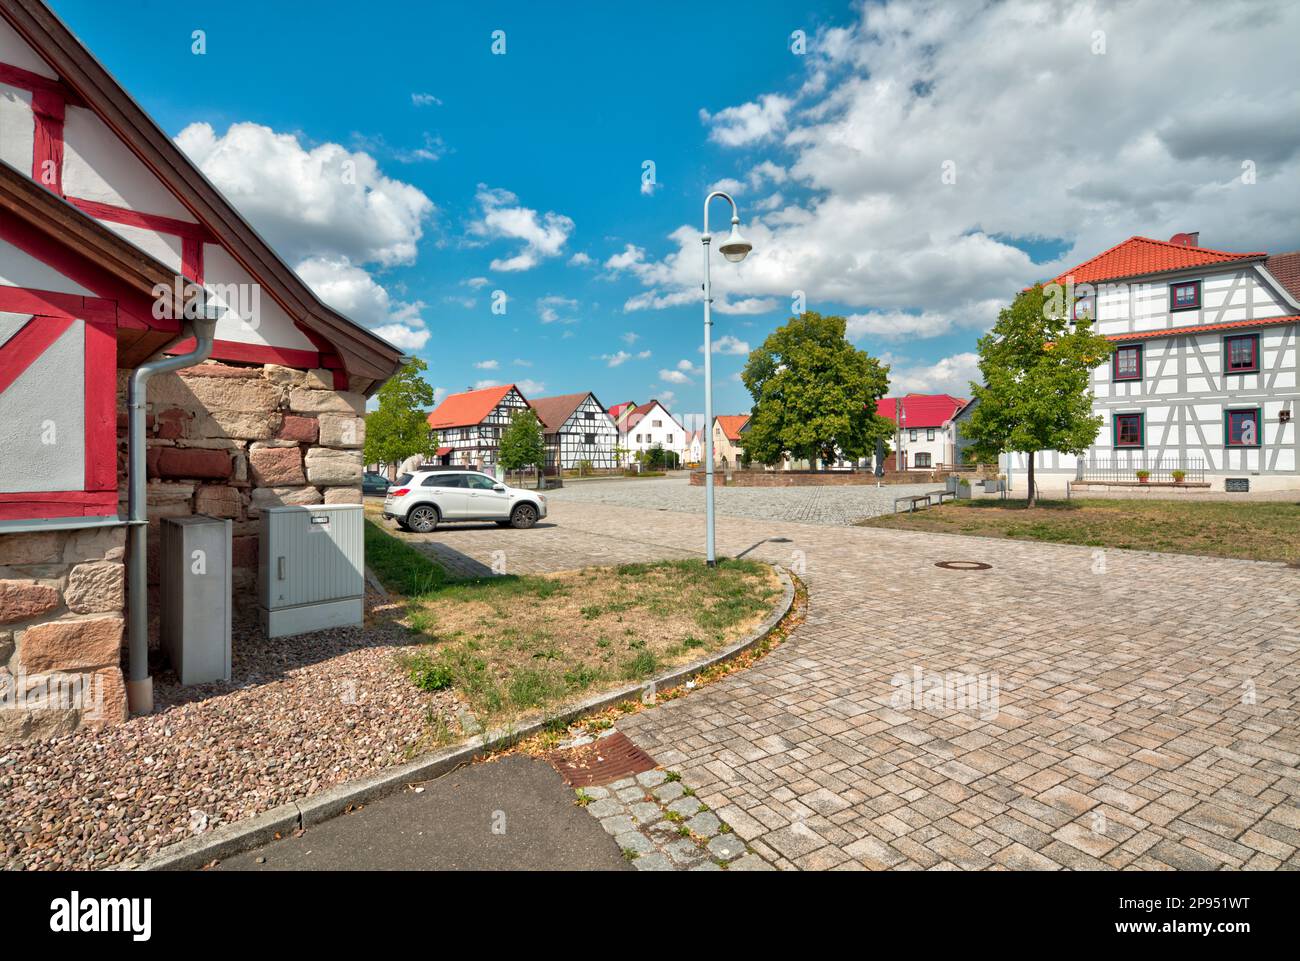 Inn, Zur Linde, marketplace, house facade, half-timbered, historical, Breitungen, Werra, Thuringia, Germany, Stock Photo